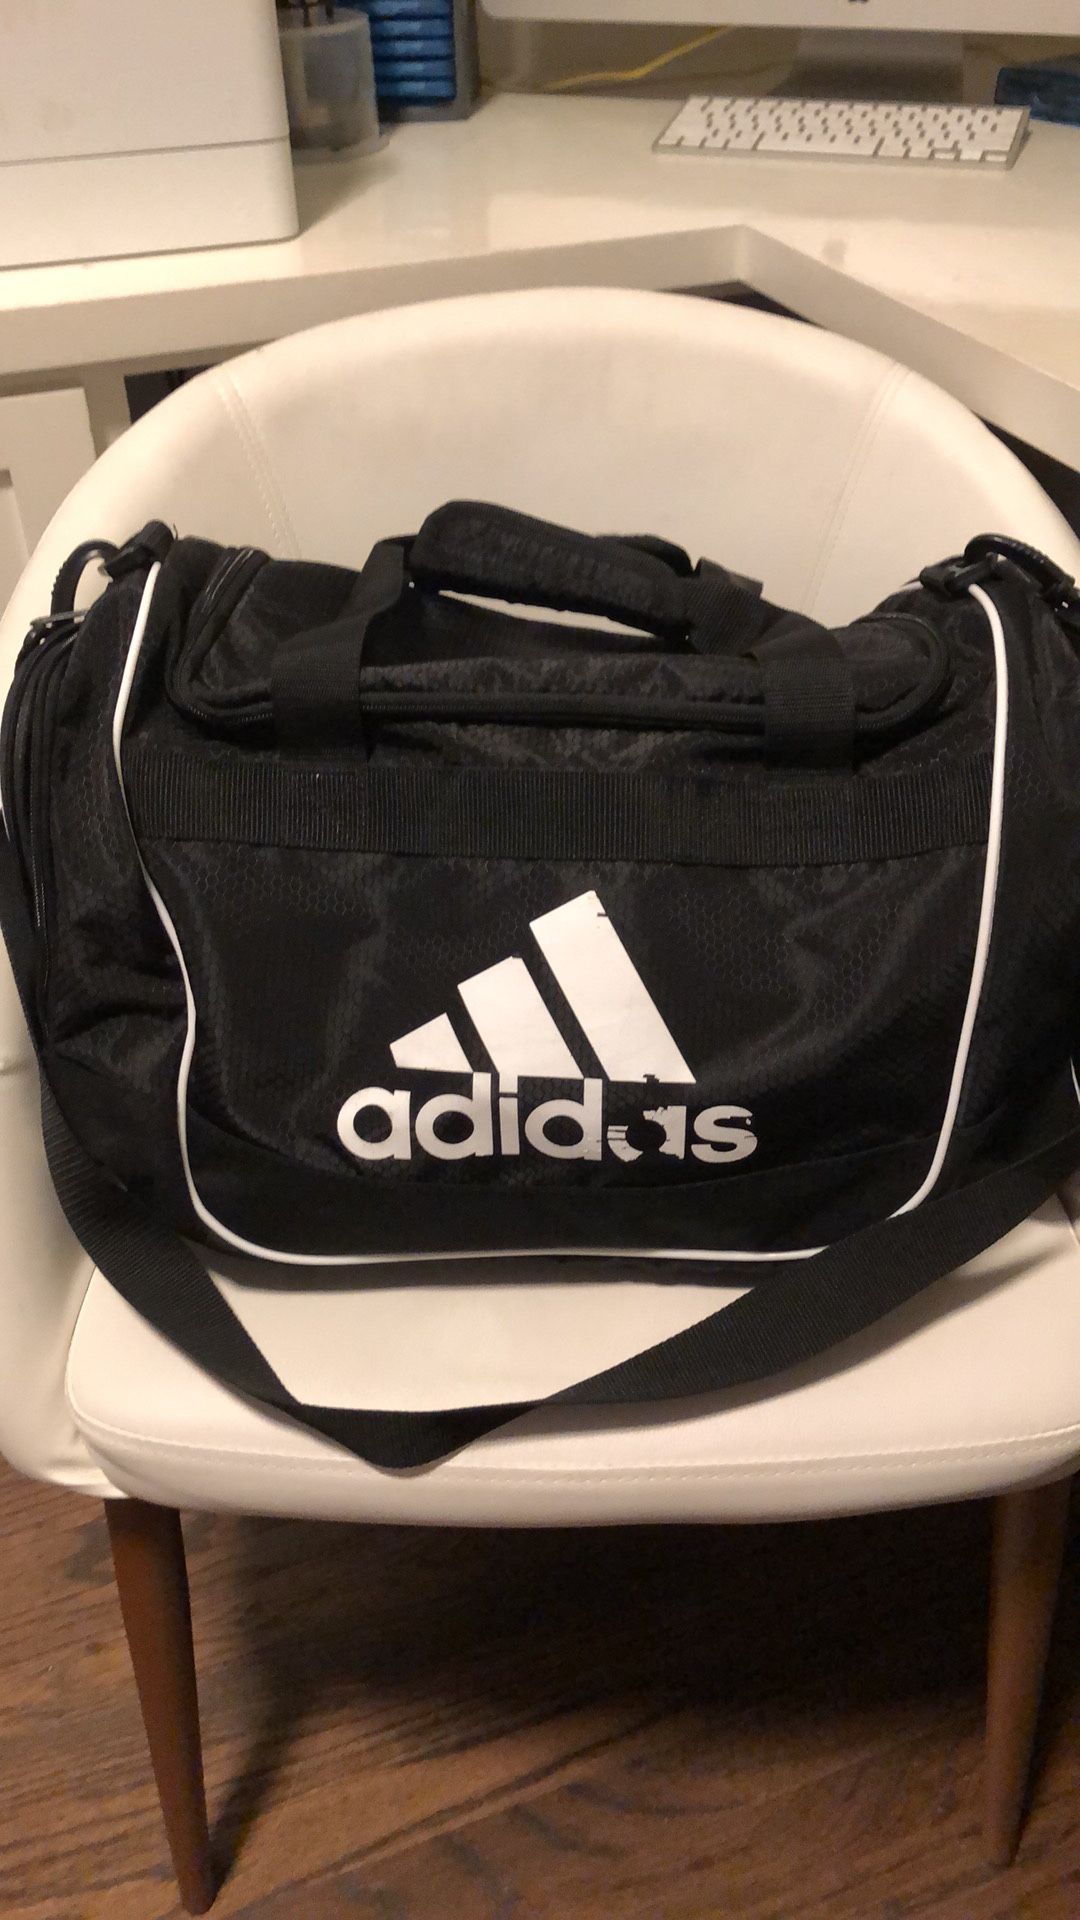 Adidas duffle medium size bag